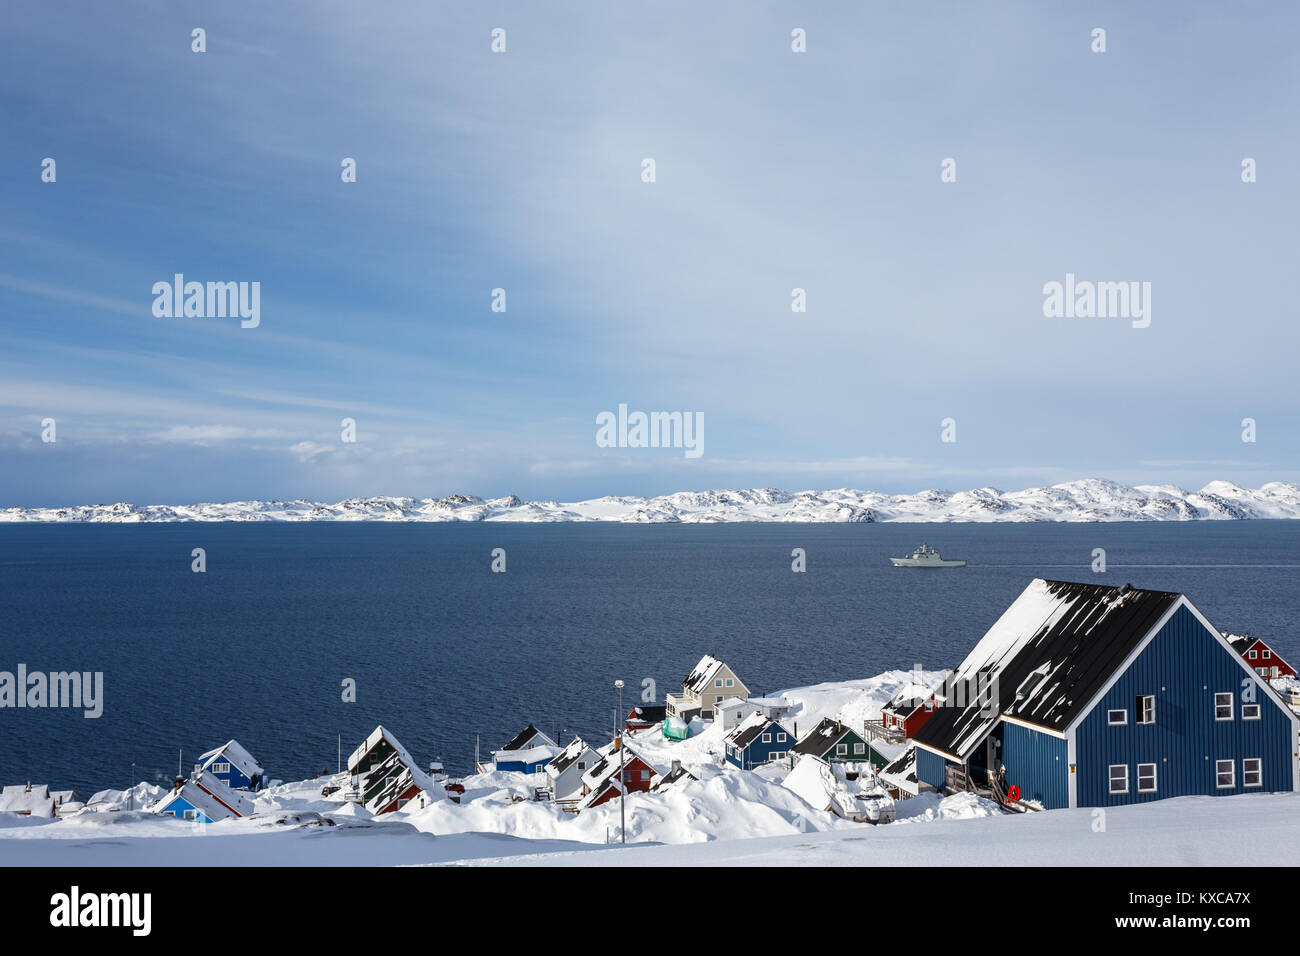 Coperte di neve case inuit al fiordo con nave di drifting, Nuuk, Groenlandia Foto Stock